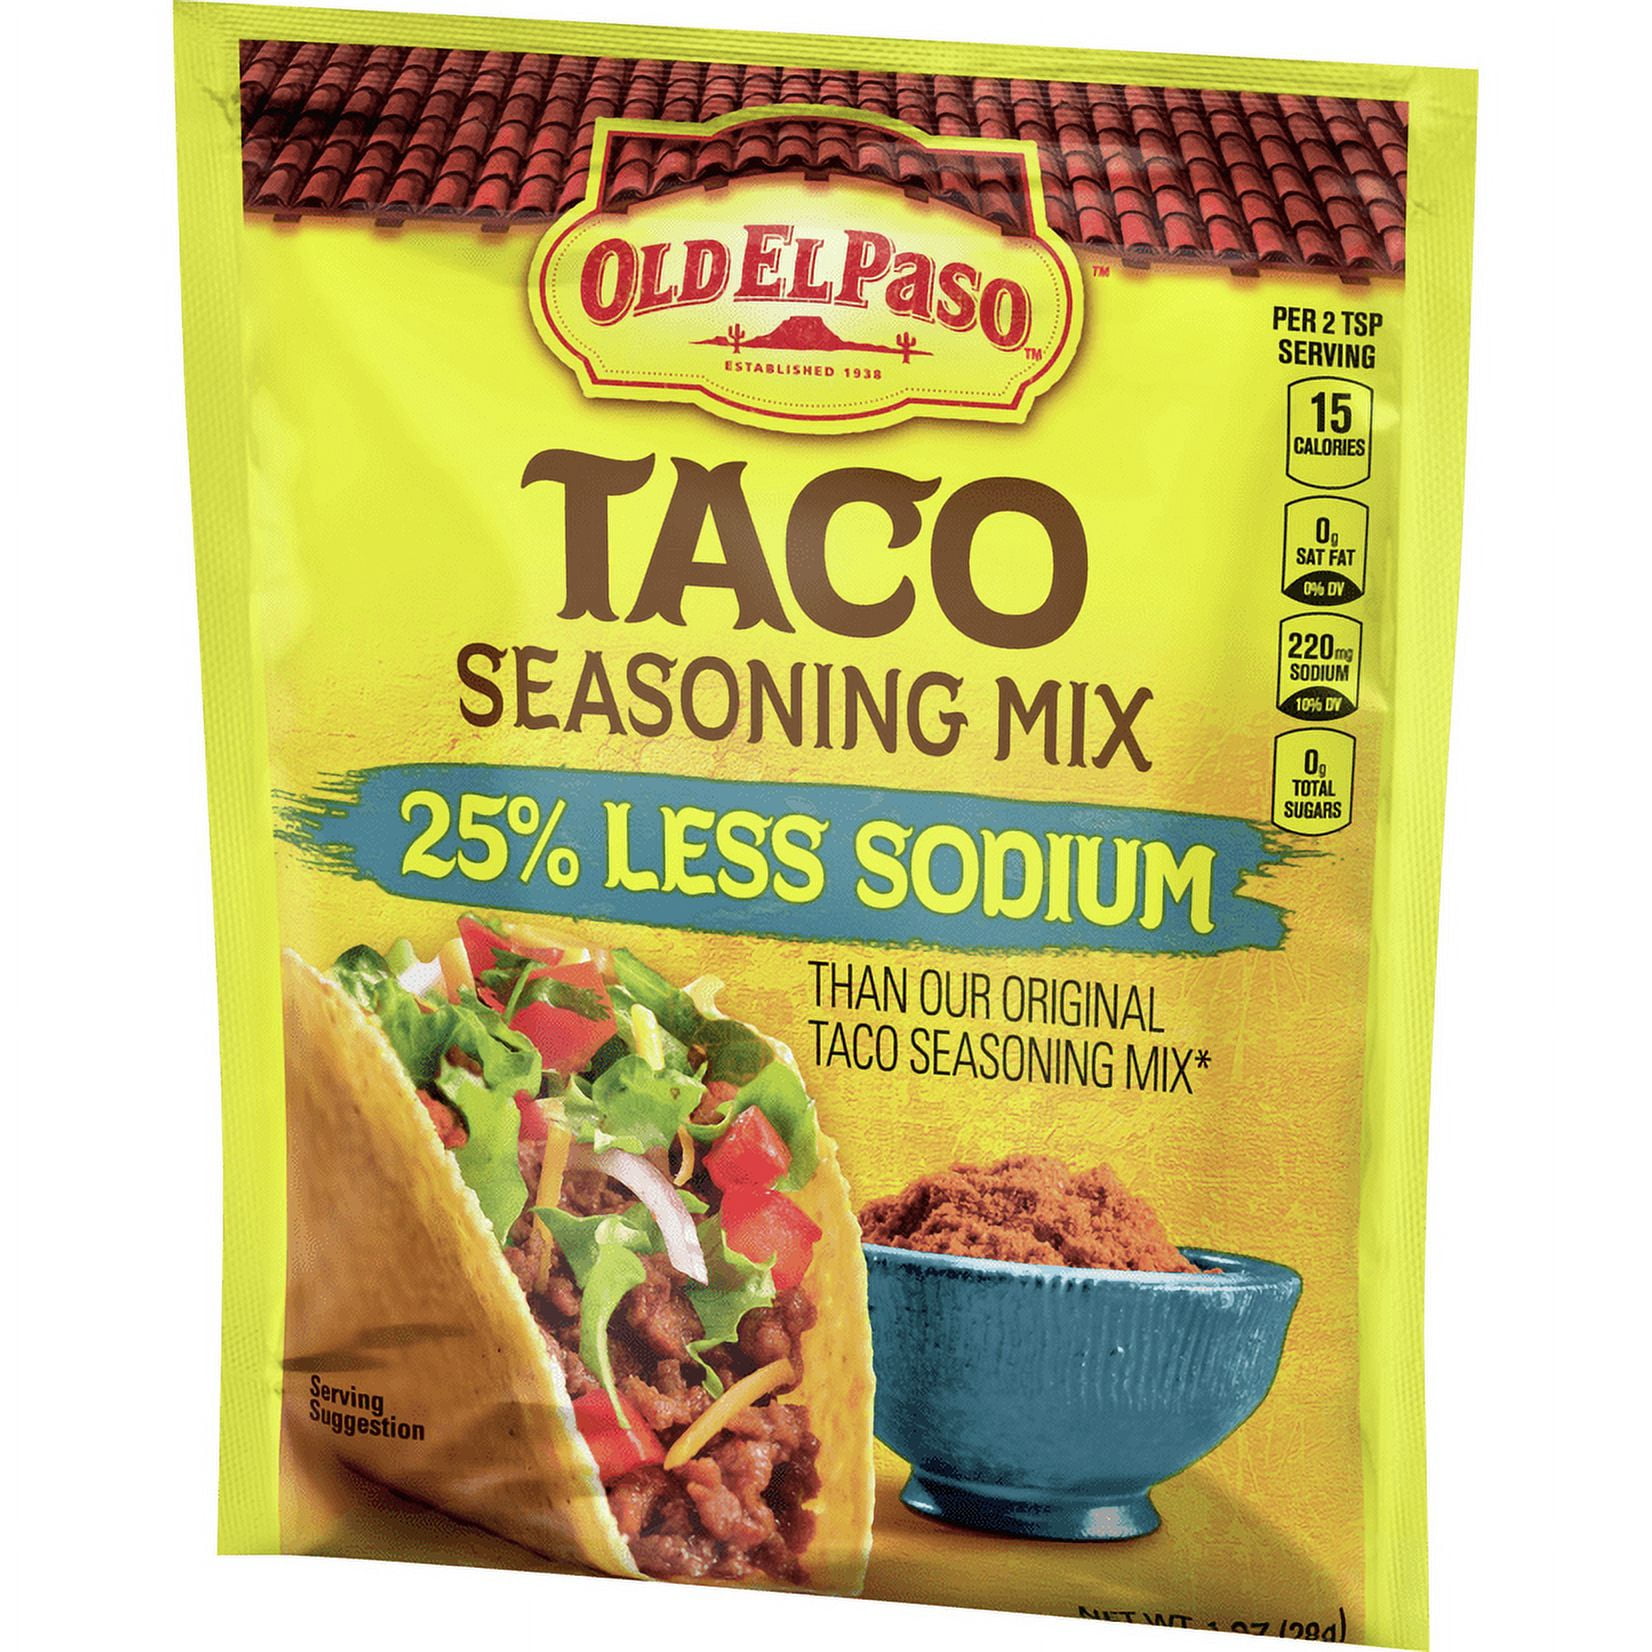 Regal Salt-Free Taco Seasoning 5 lb.